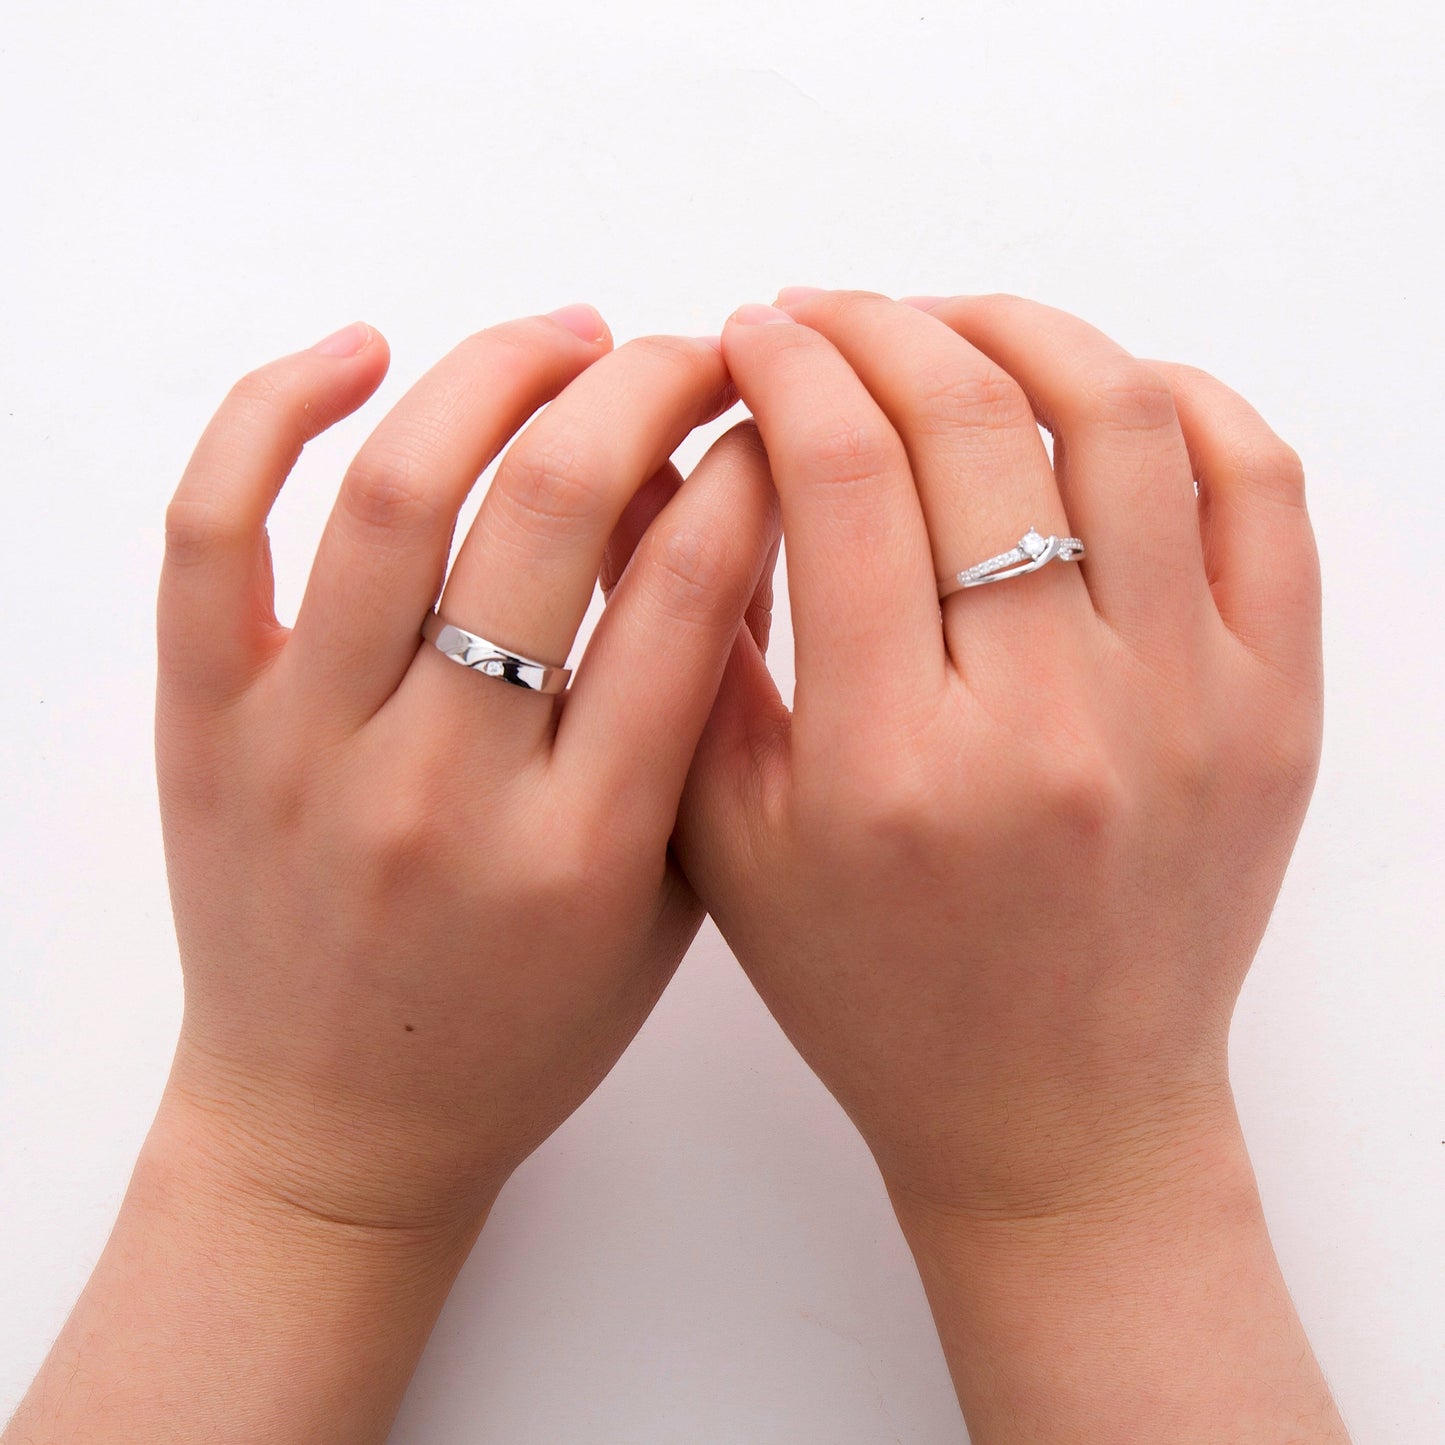 AAA Zircon 925 Silver Couple Rings Adjustable in Sizes